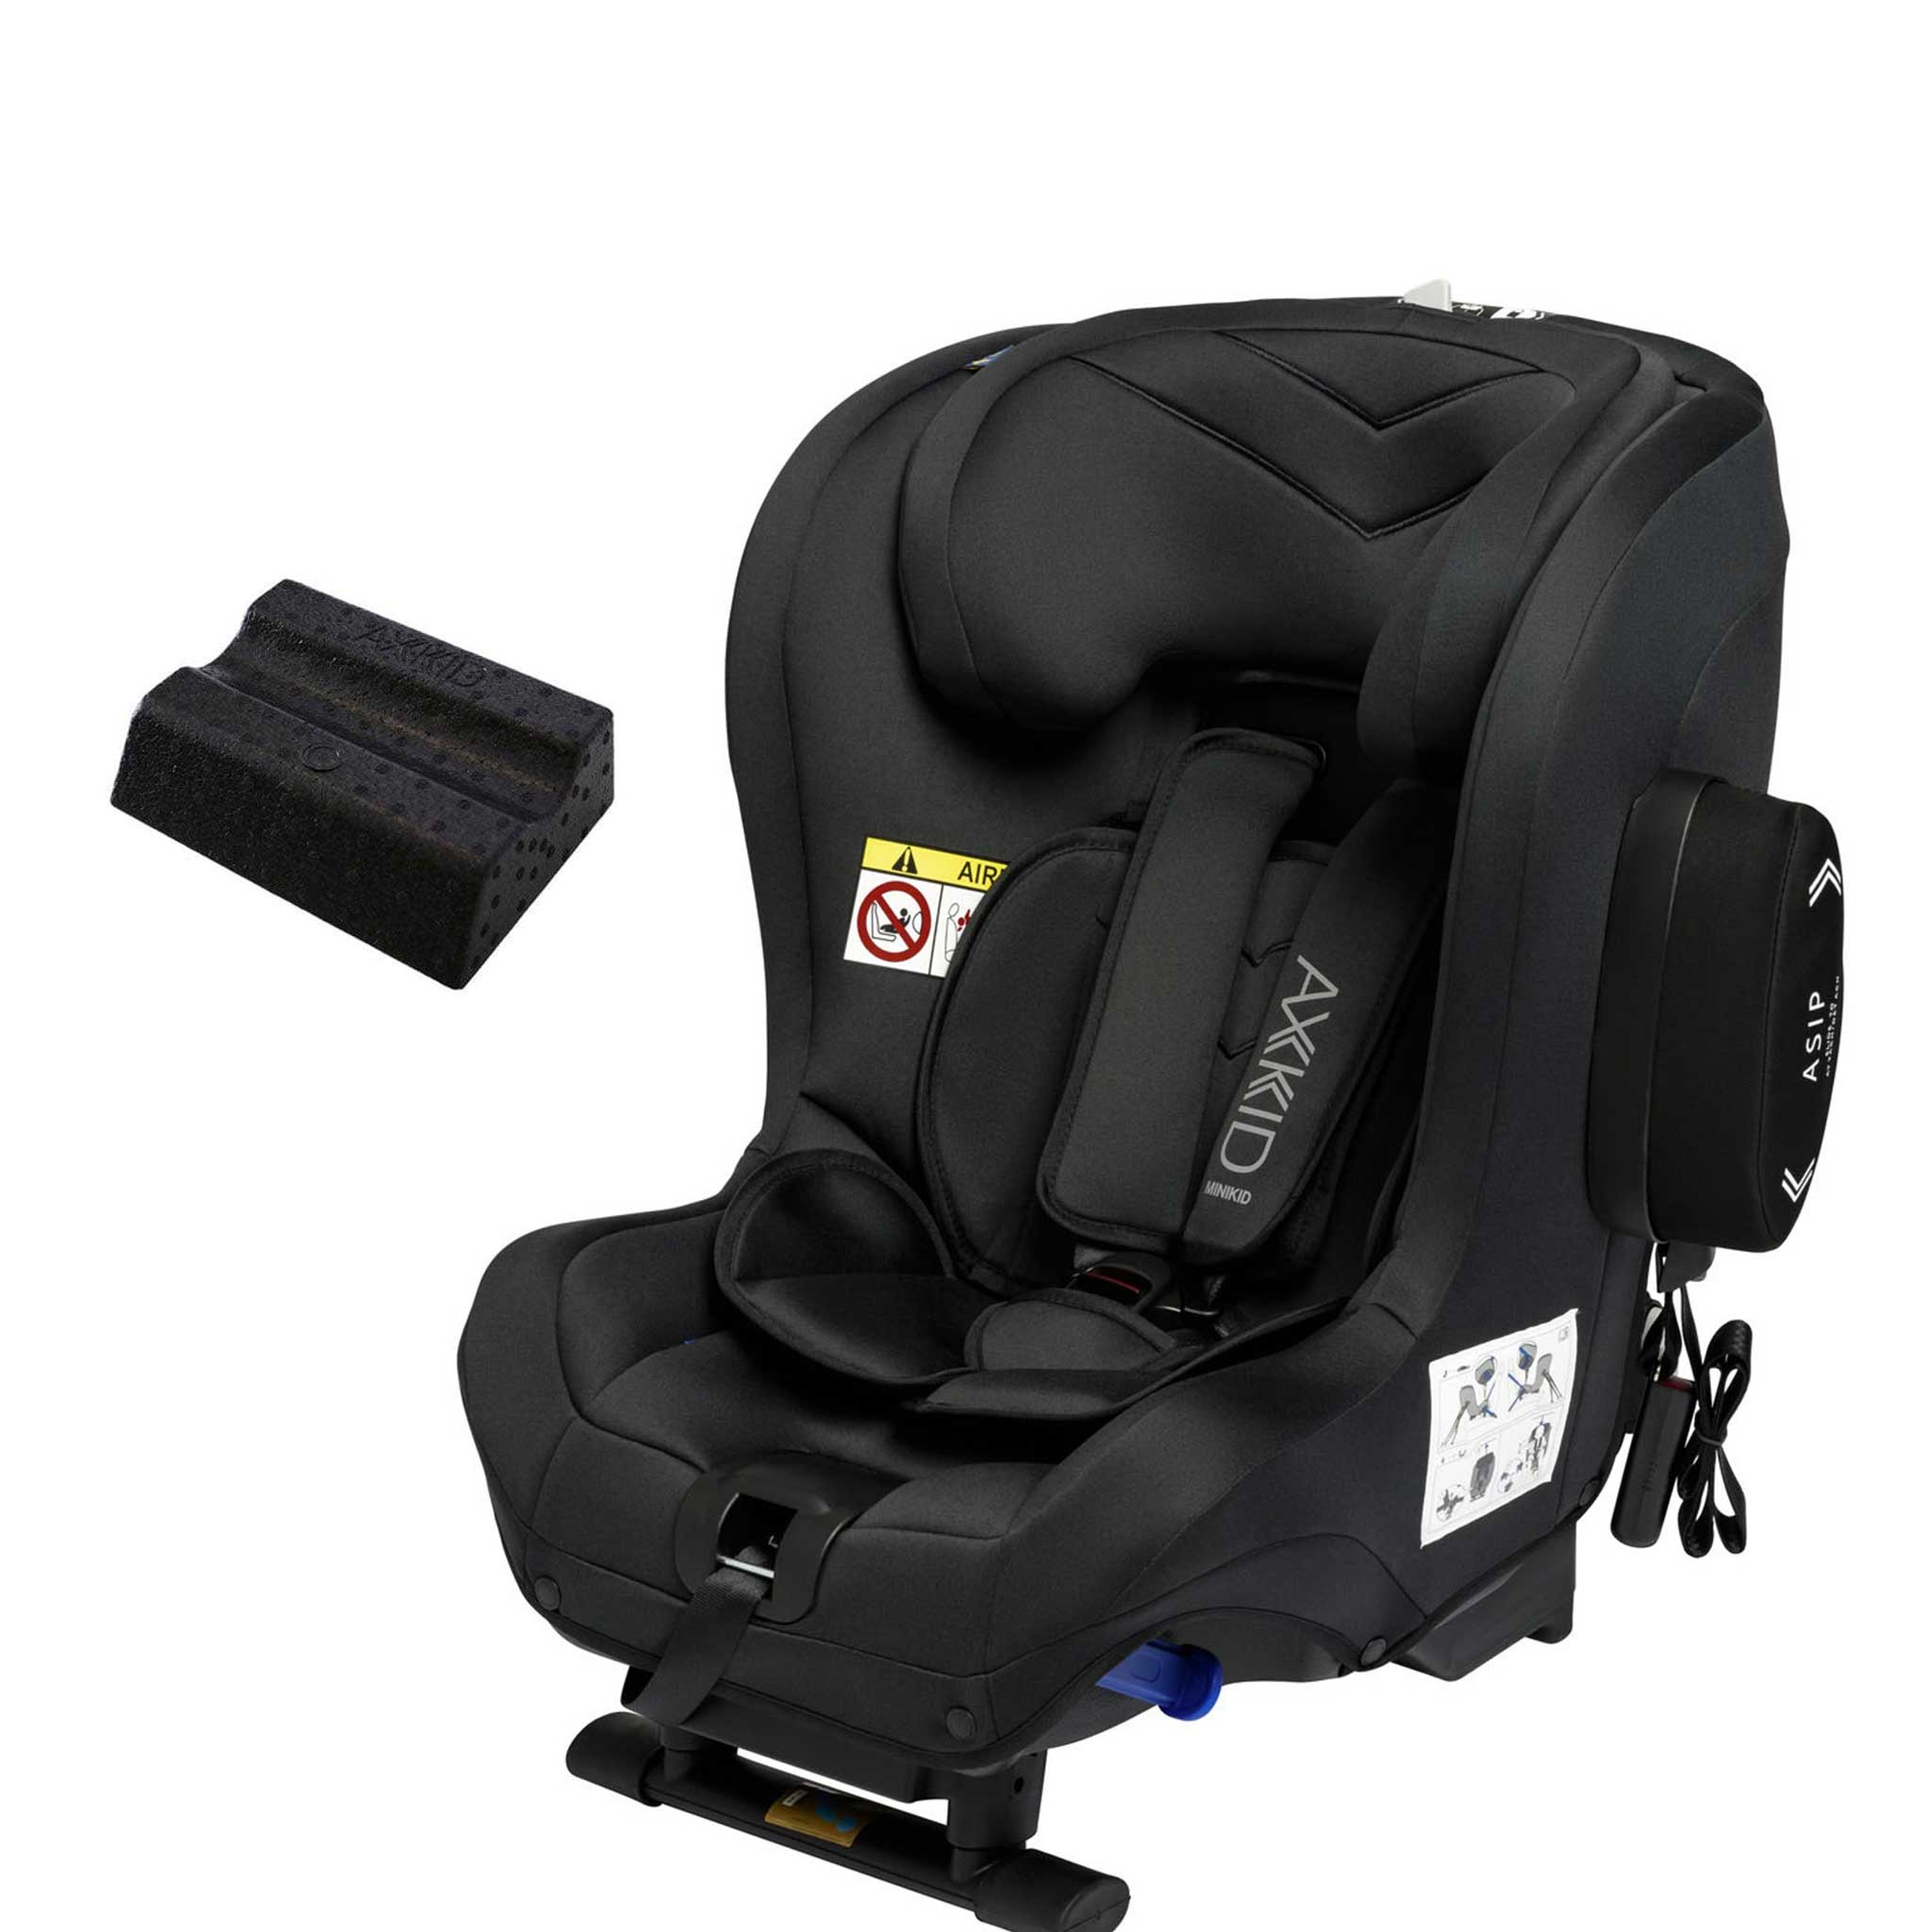 Axkid Minikid 2 Premium - Shell Black With Free Wedge Toddler Car Seats 15628-SHL-BLK 7350057585924